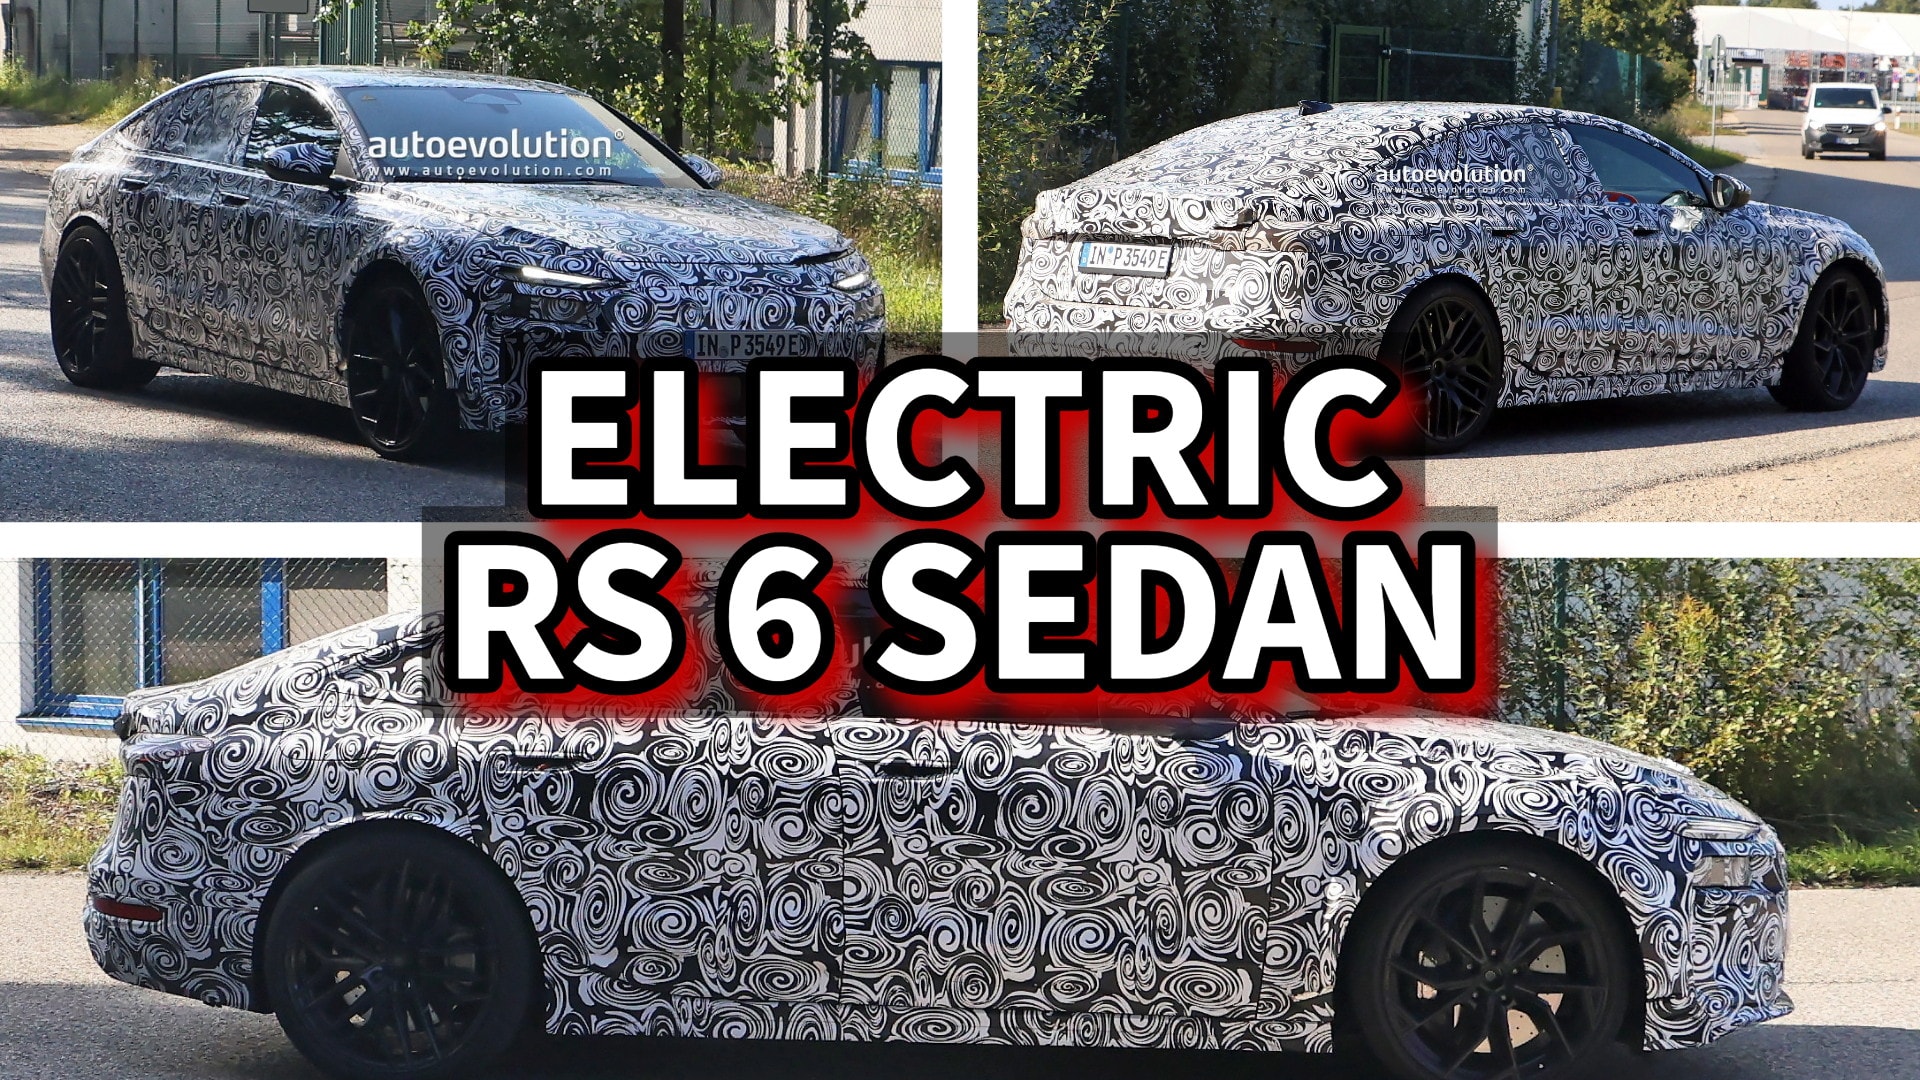 Audi RS6 sedan likely to return as an EV in 2025. Details here